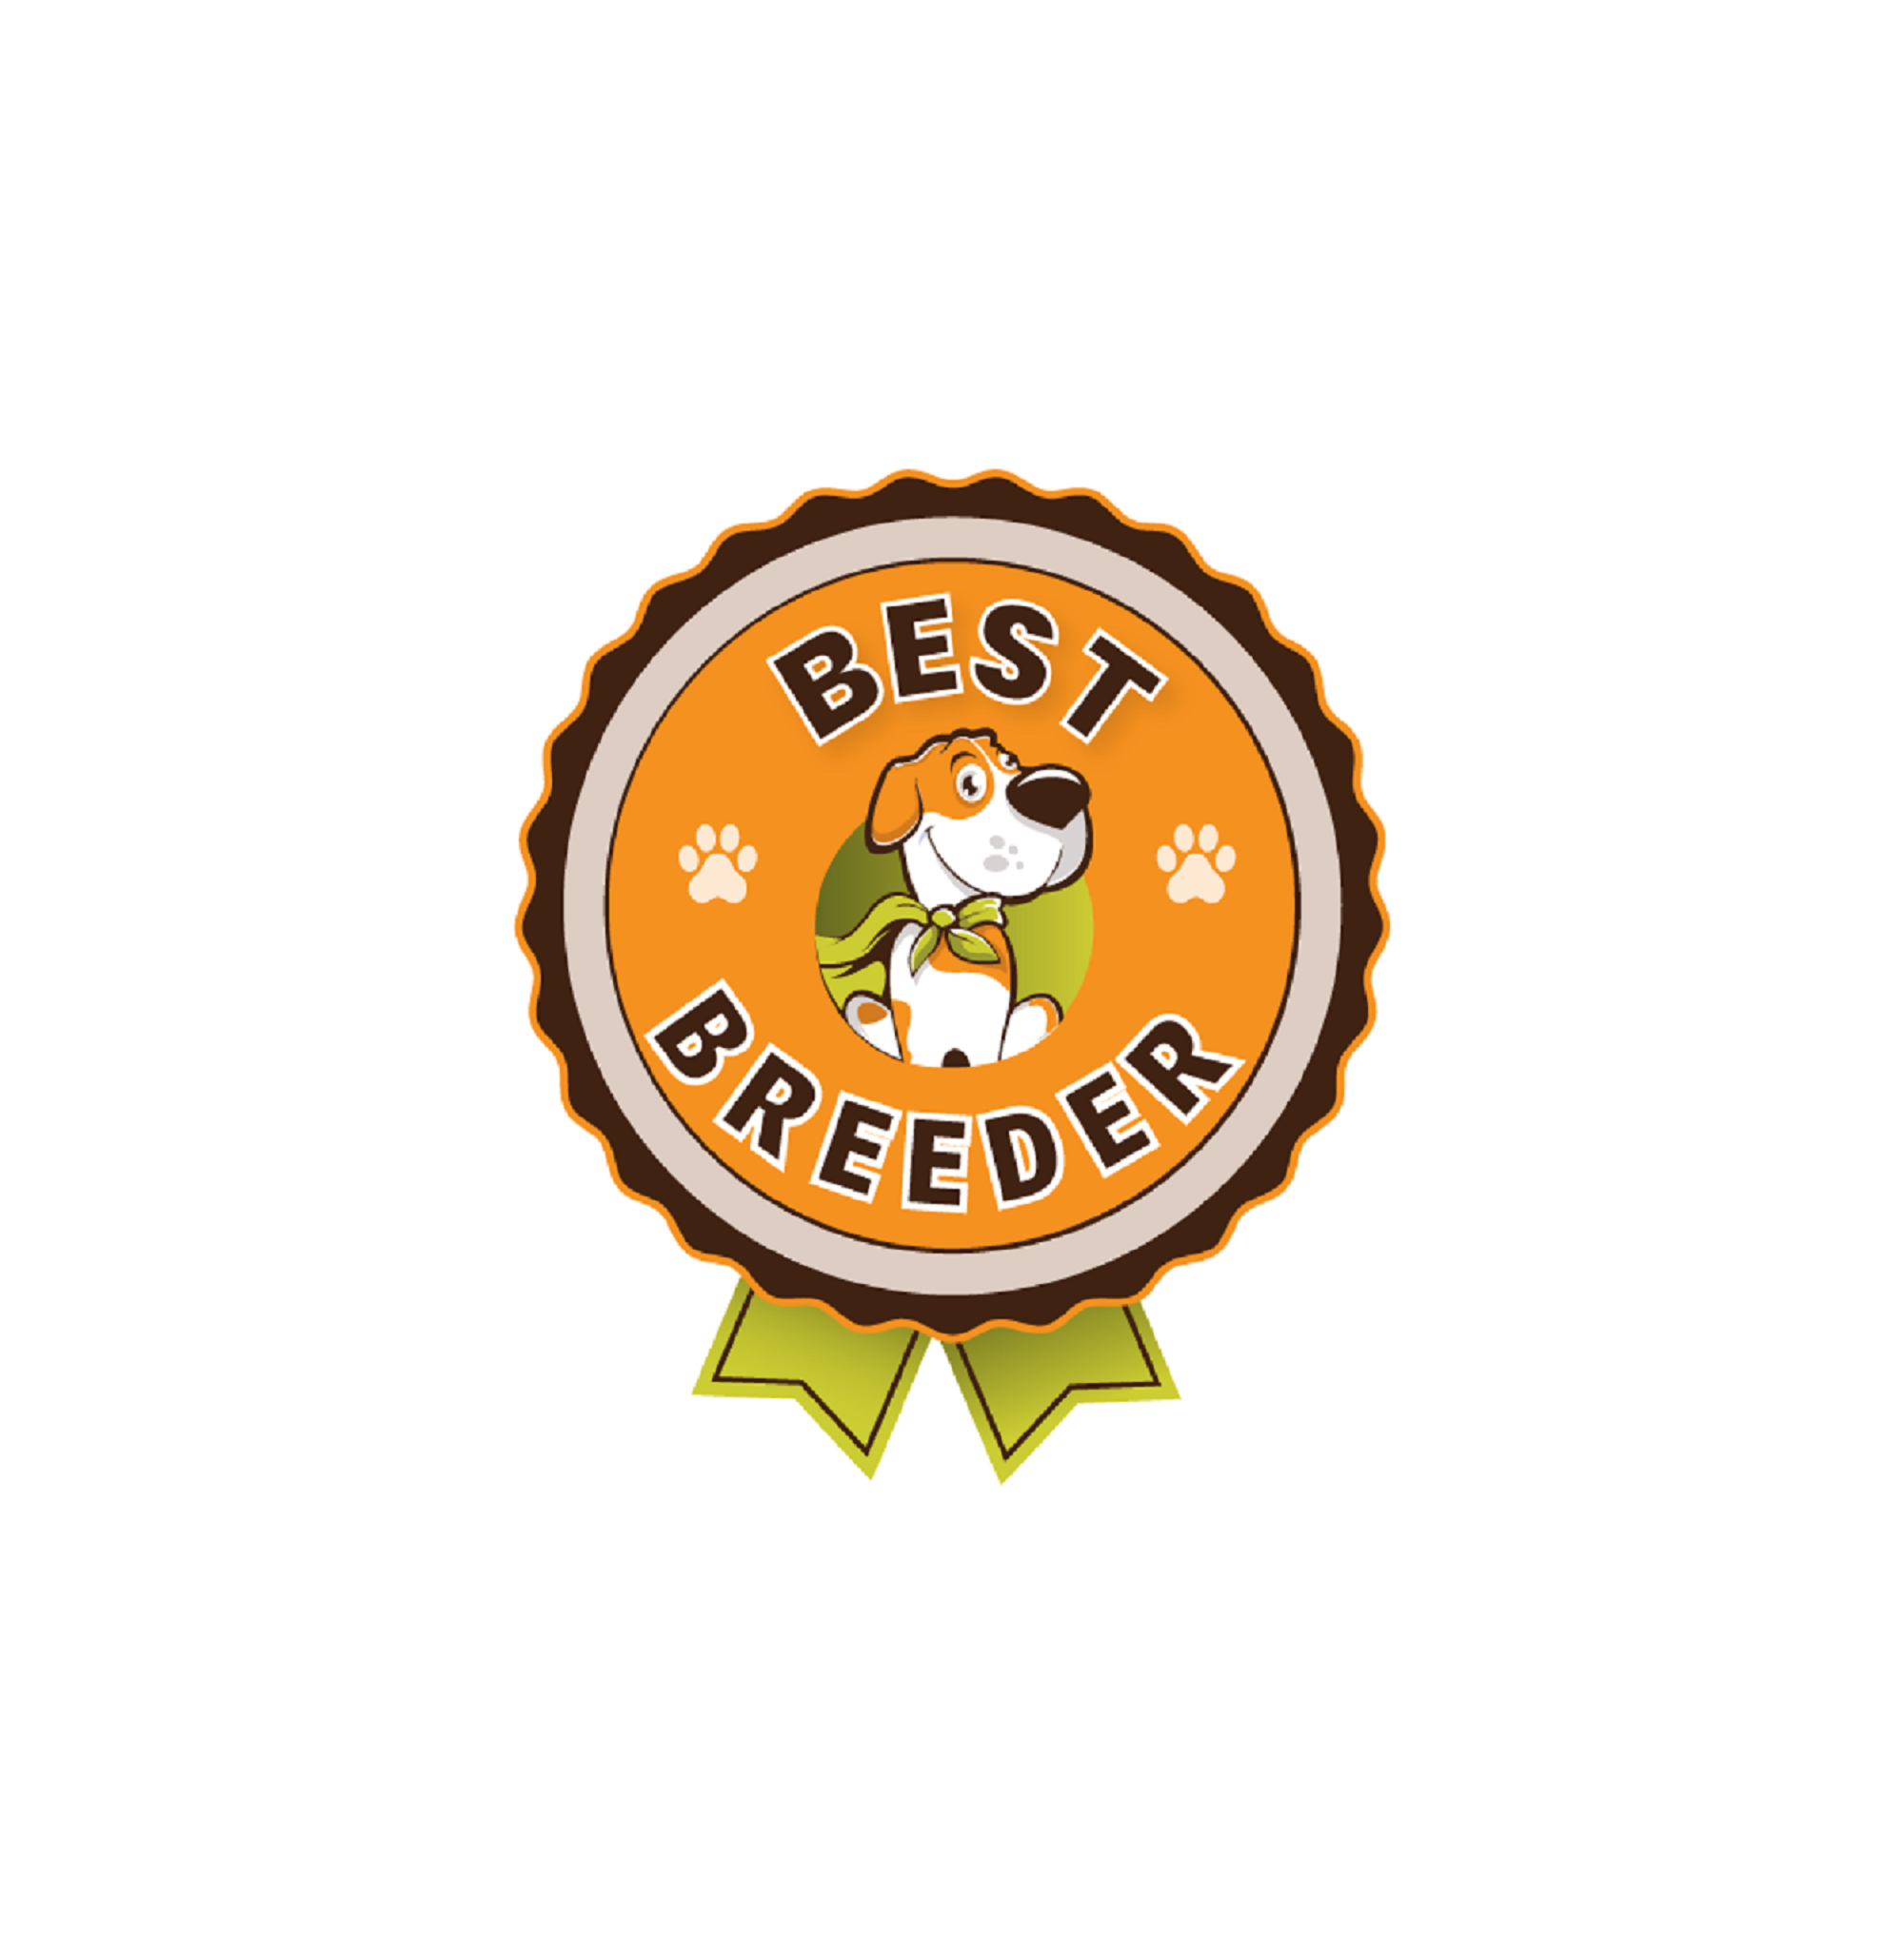 Best-Breeder 20.18.36.png